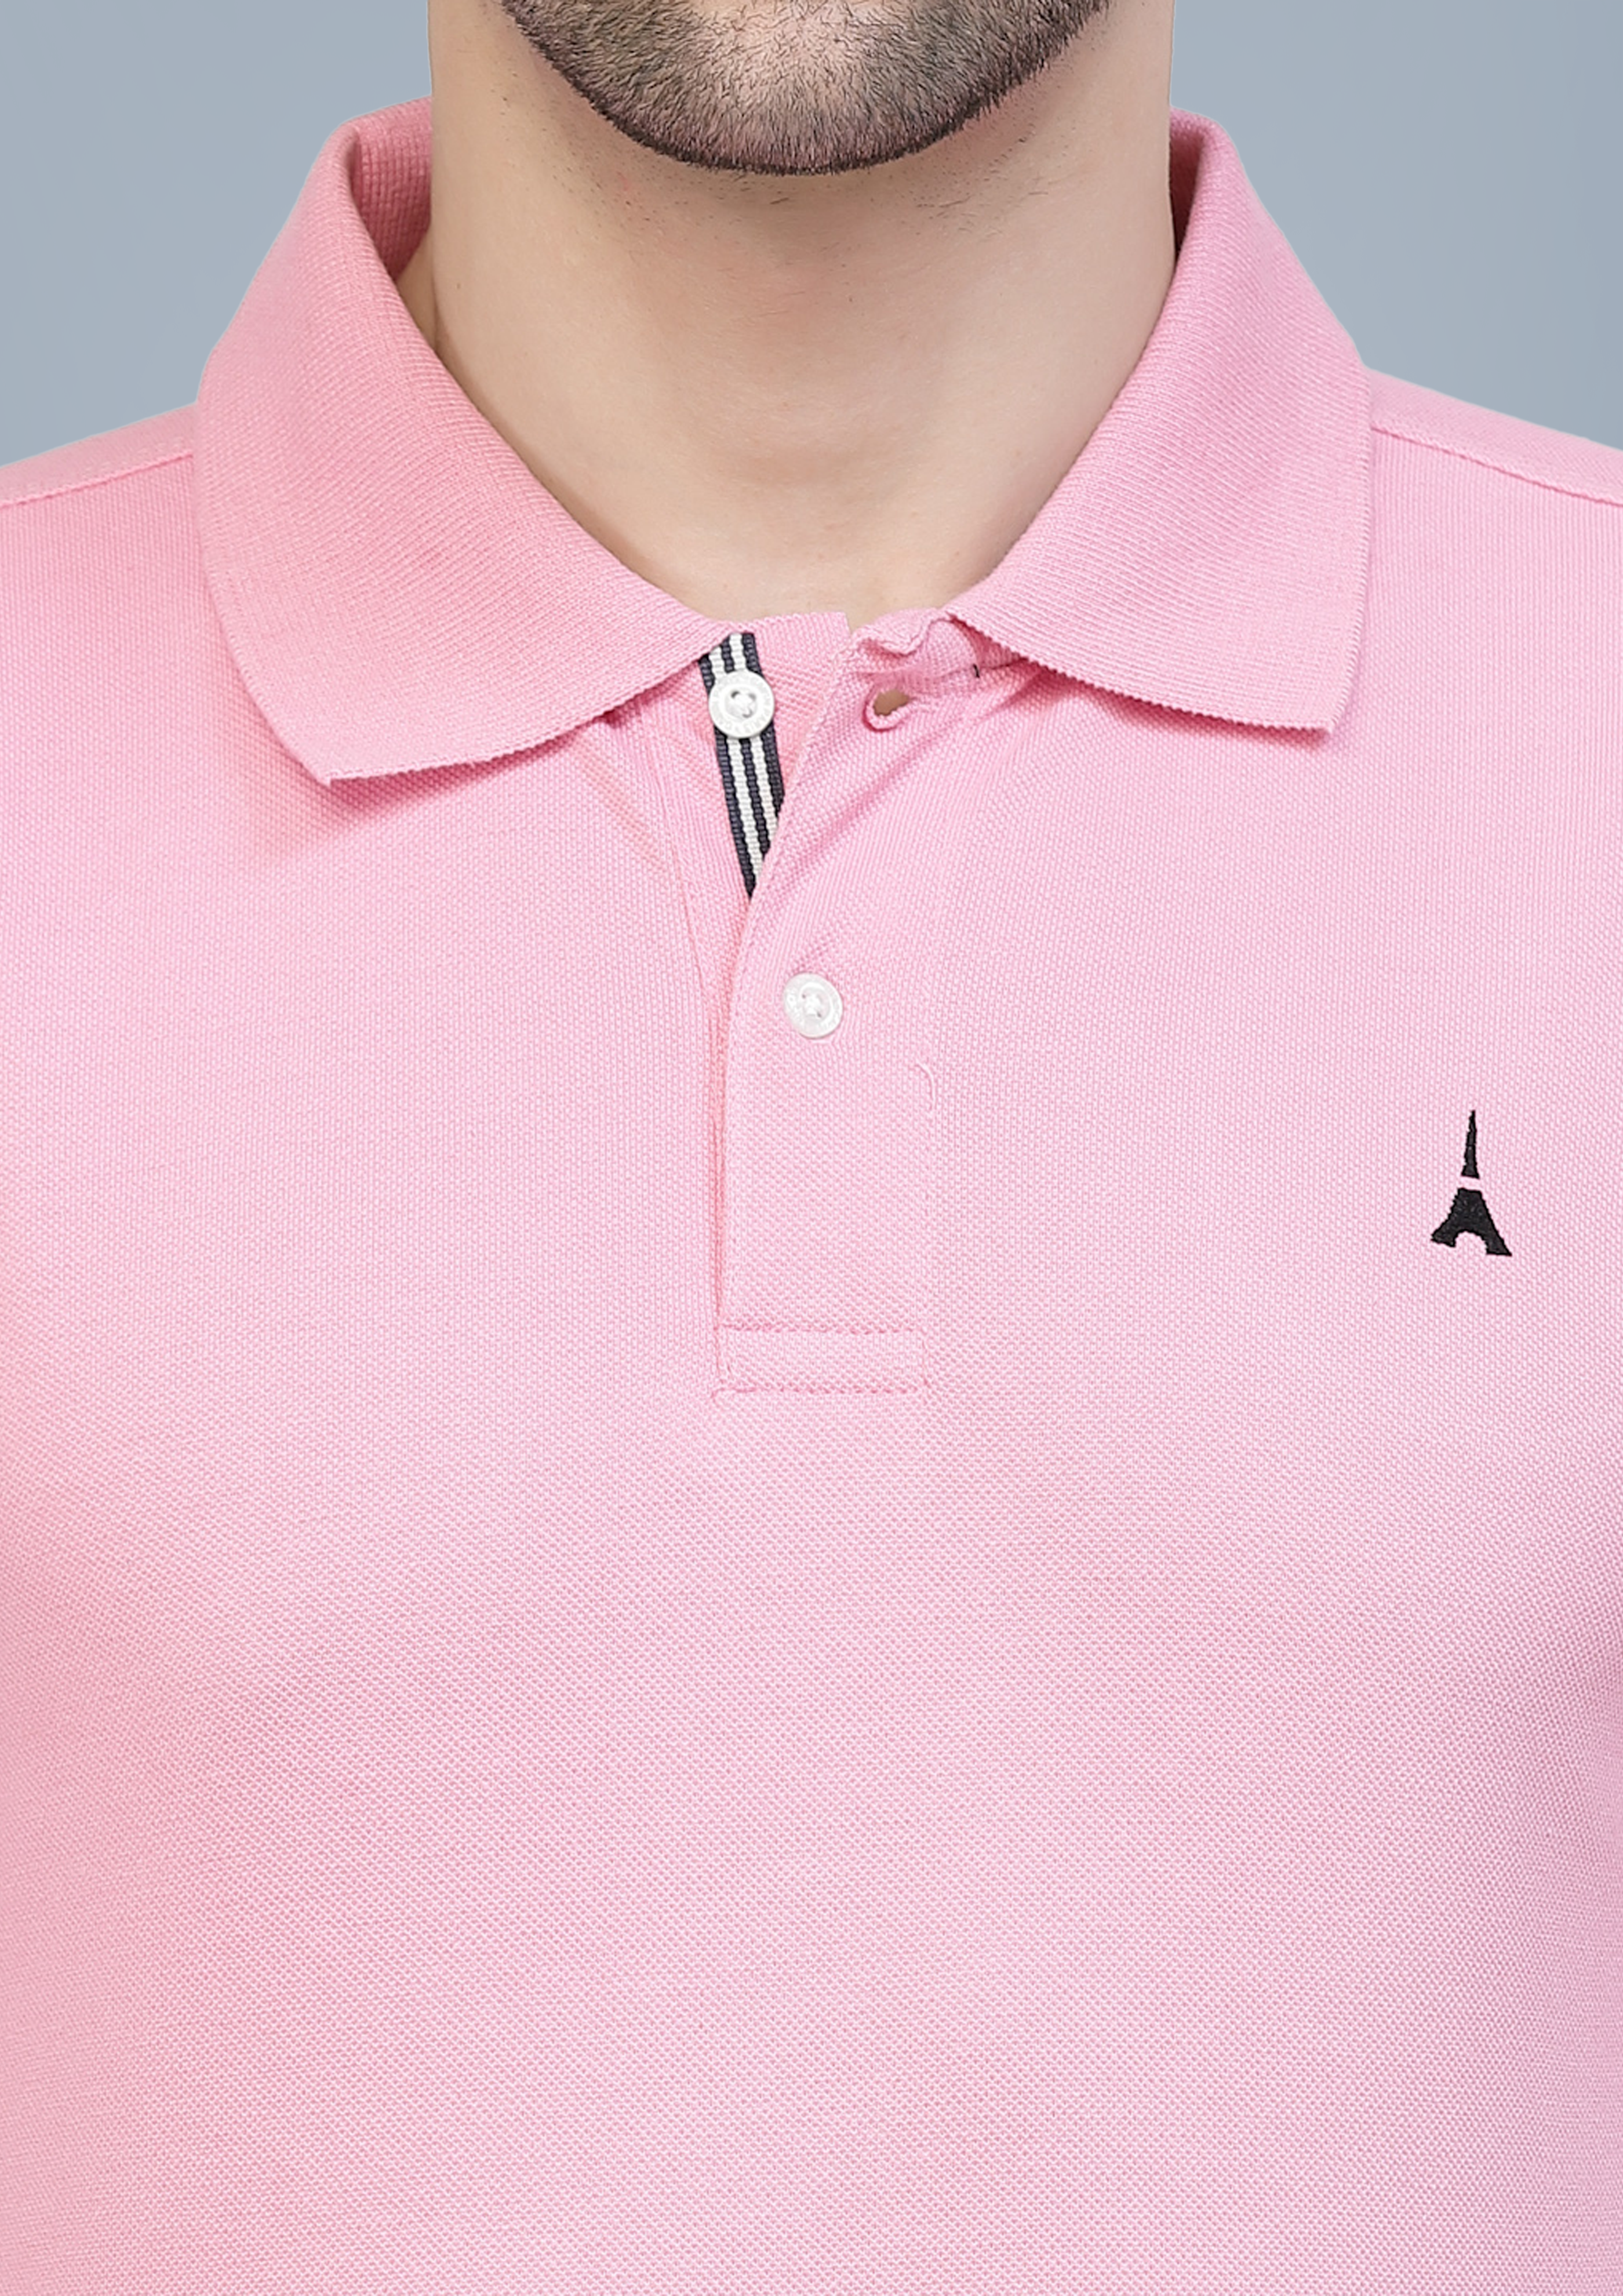 Pink Premium Polo Tshirt by Gavin Paris